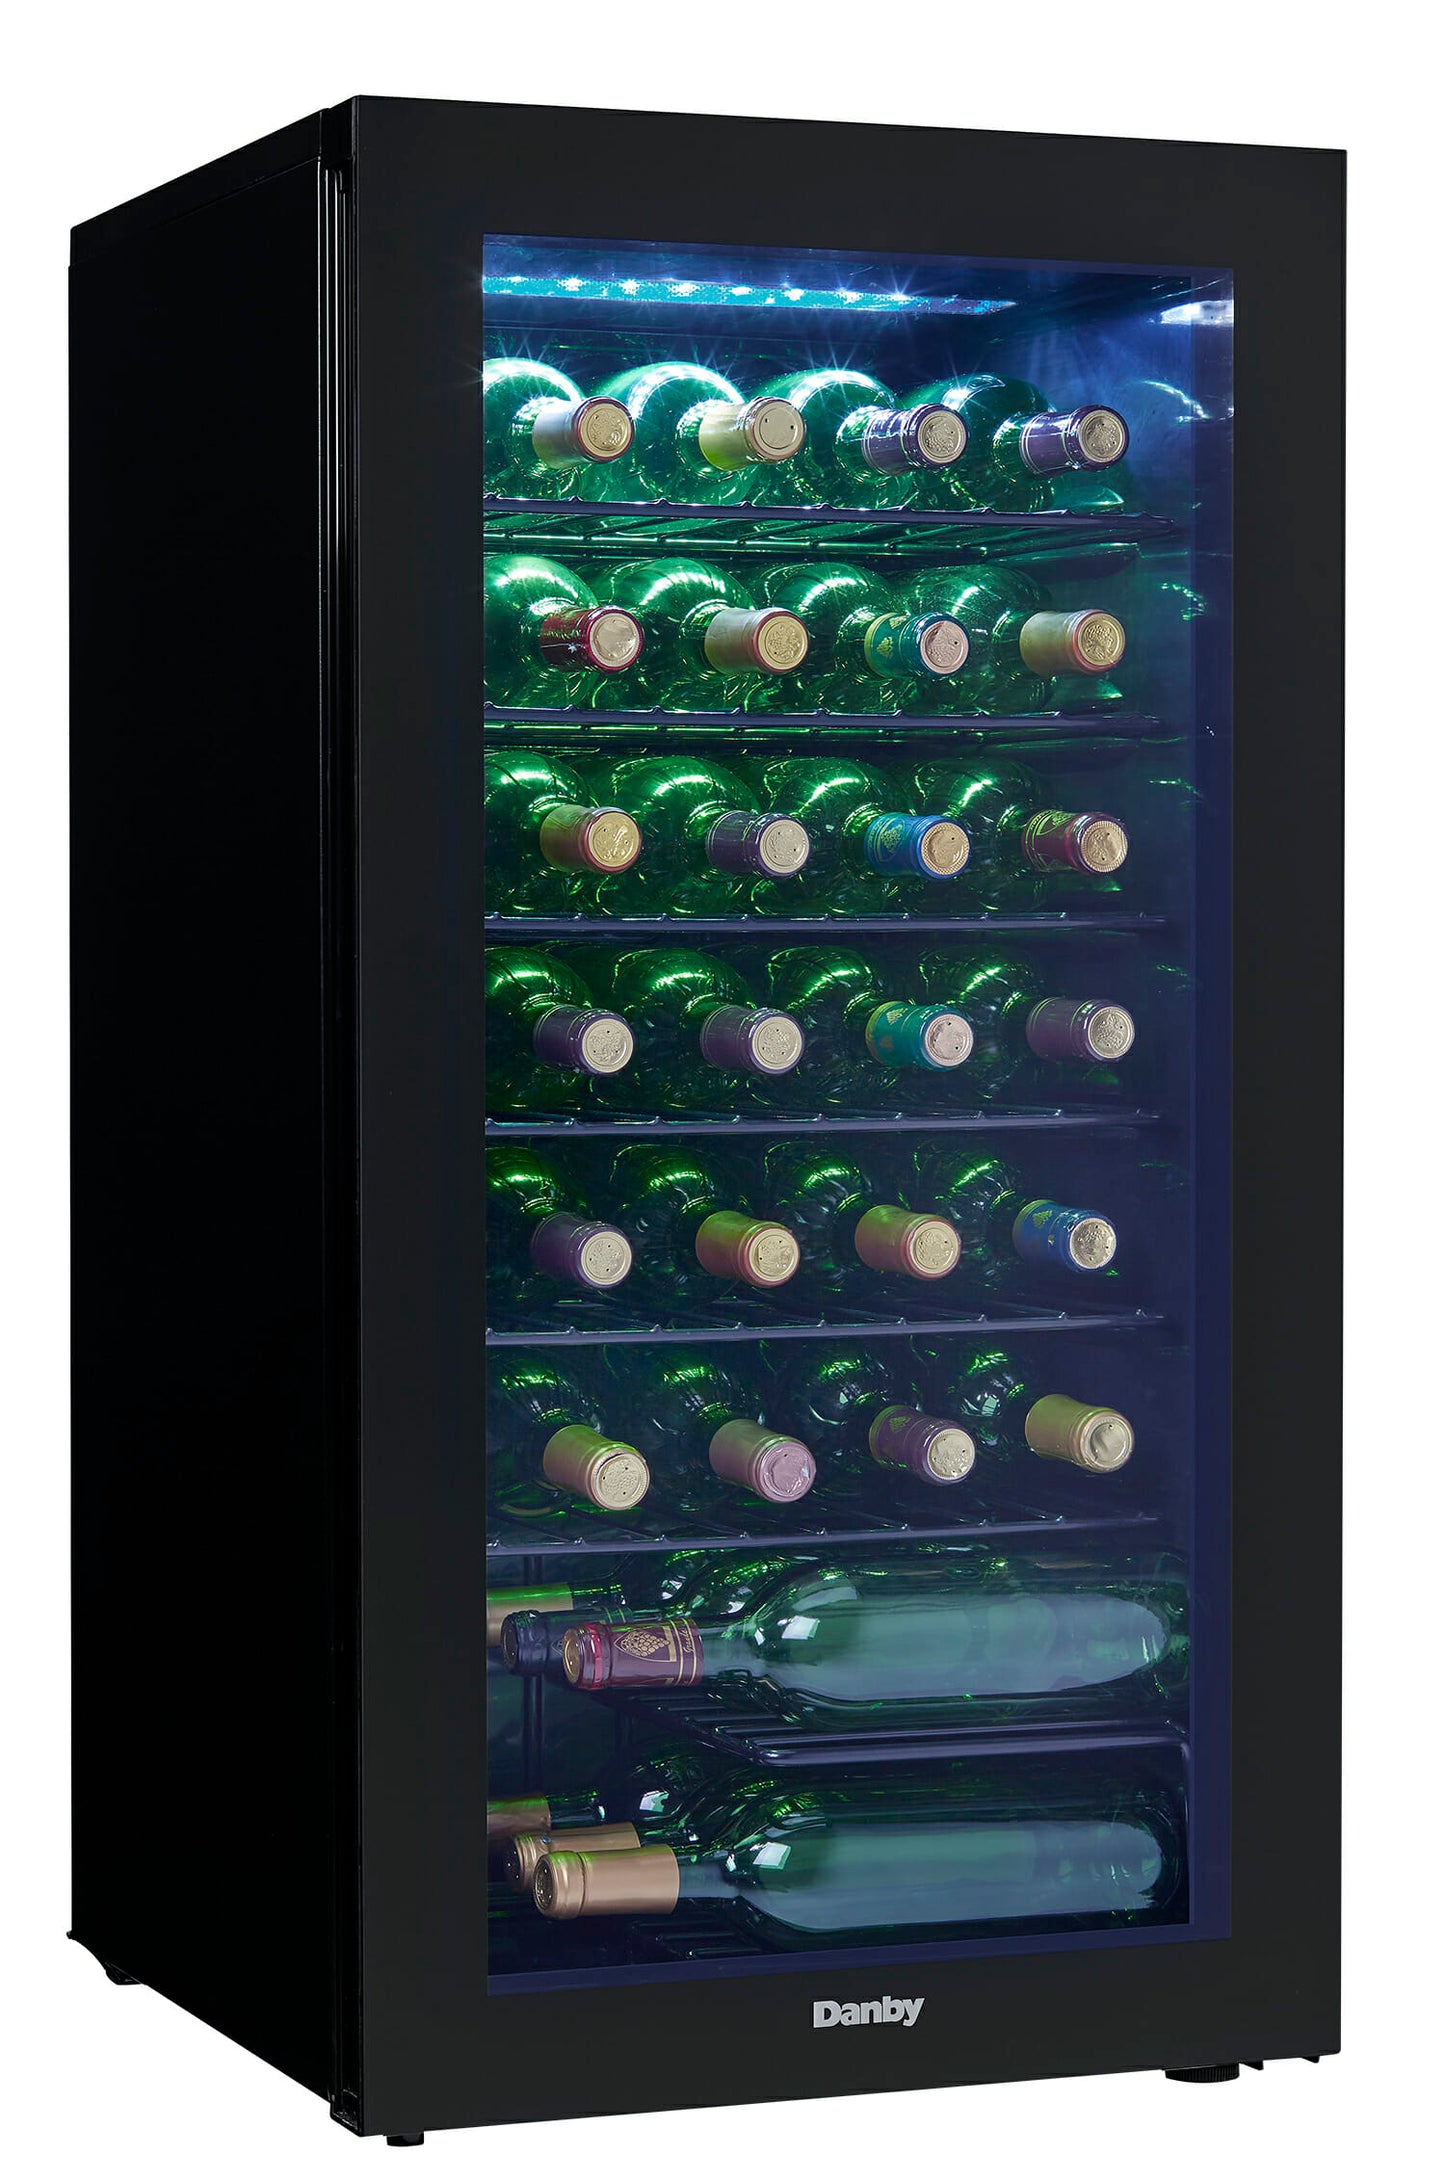 Danby 36 Bottle Free-Standing Wine Cooler in Black - DWC036A2BDB-6